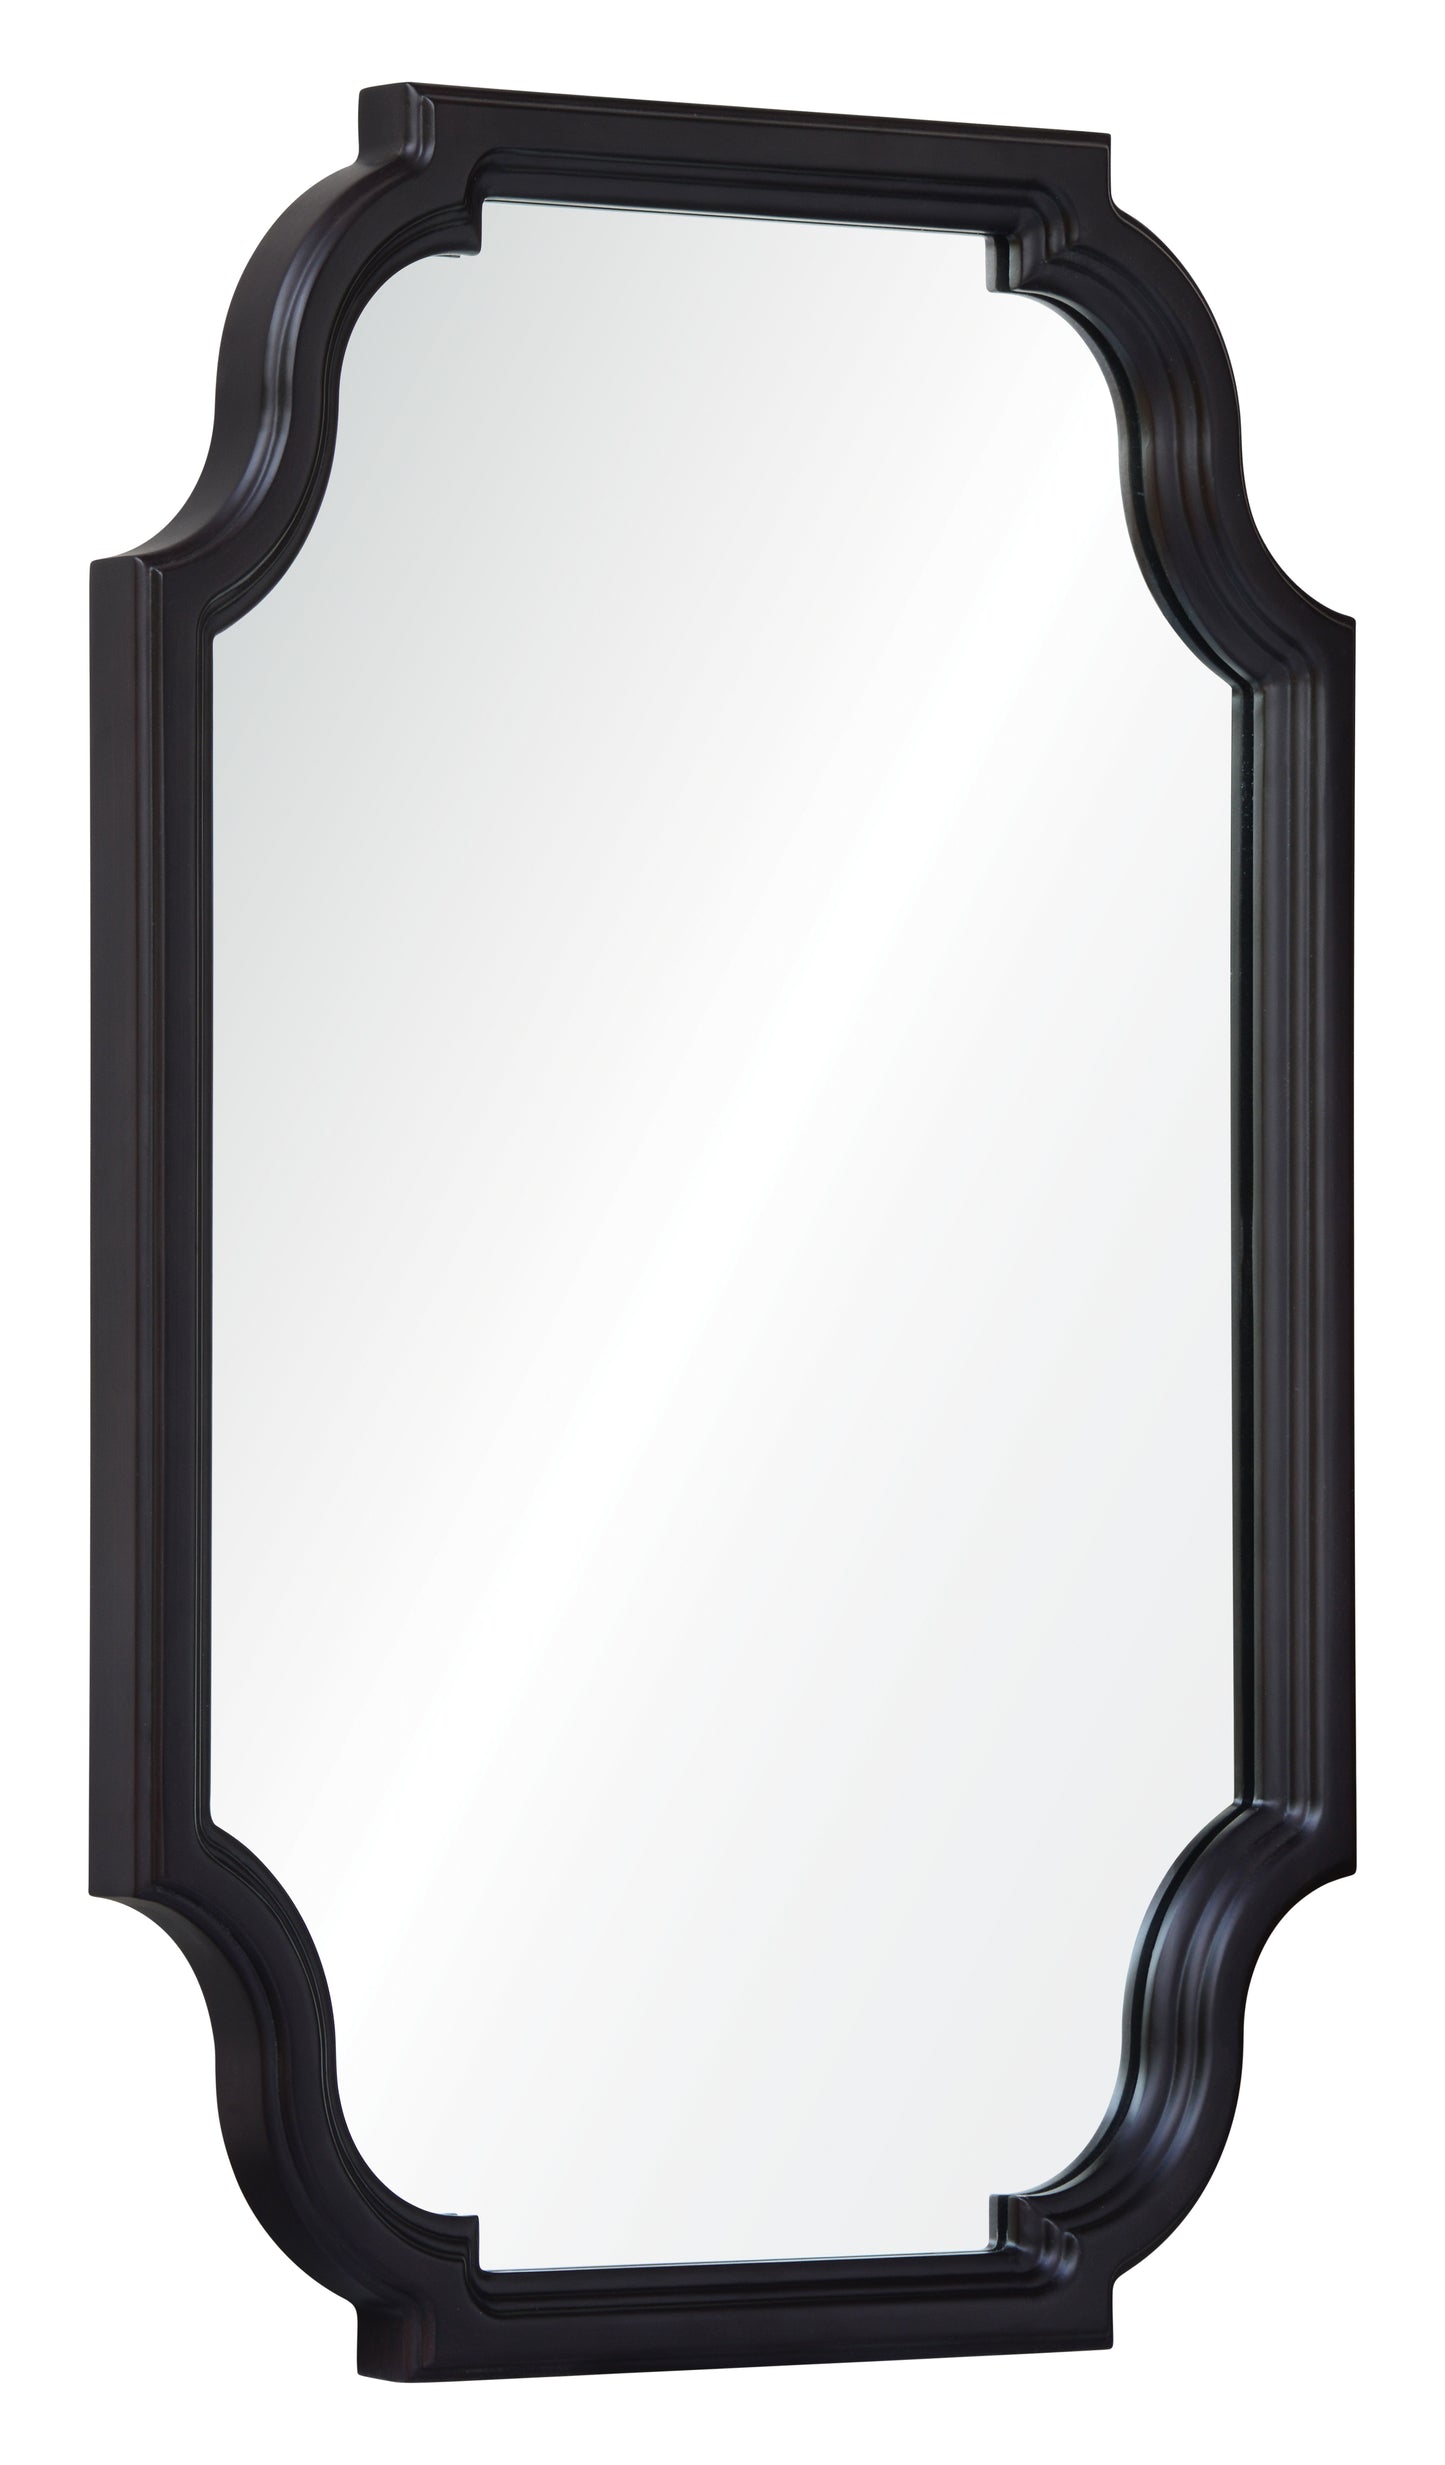 Decorative style mirror